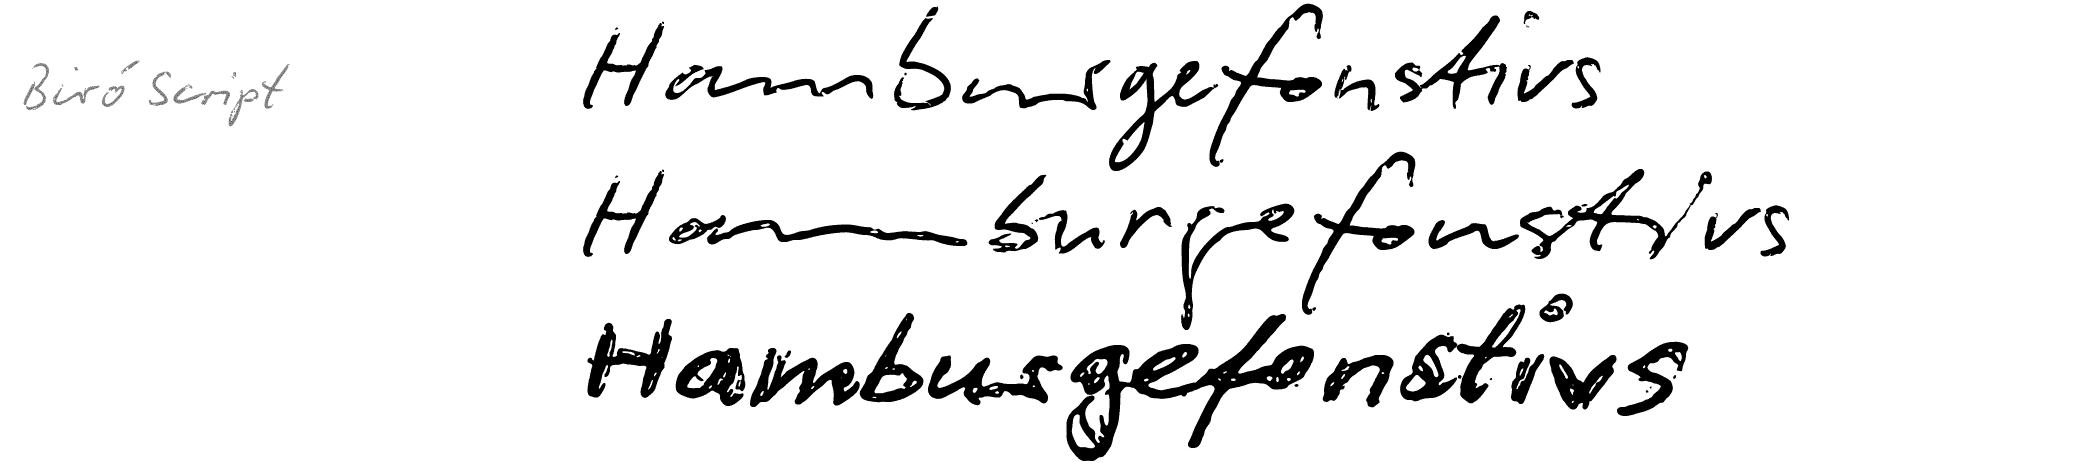 die authentische Kugelschreiber-Handschrift: Biro Script